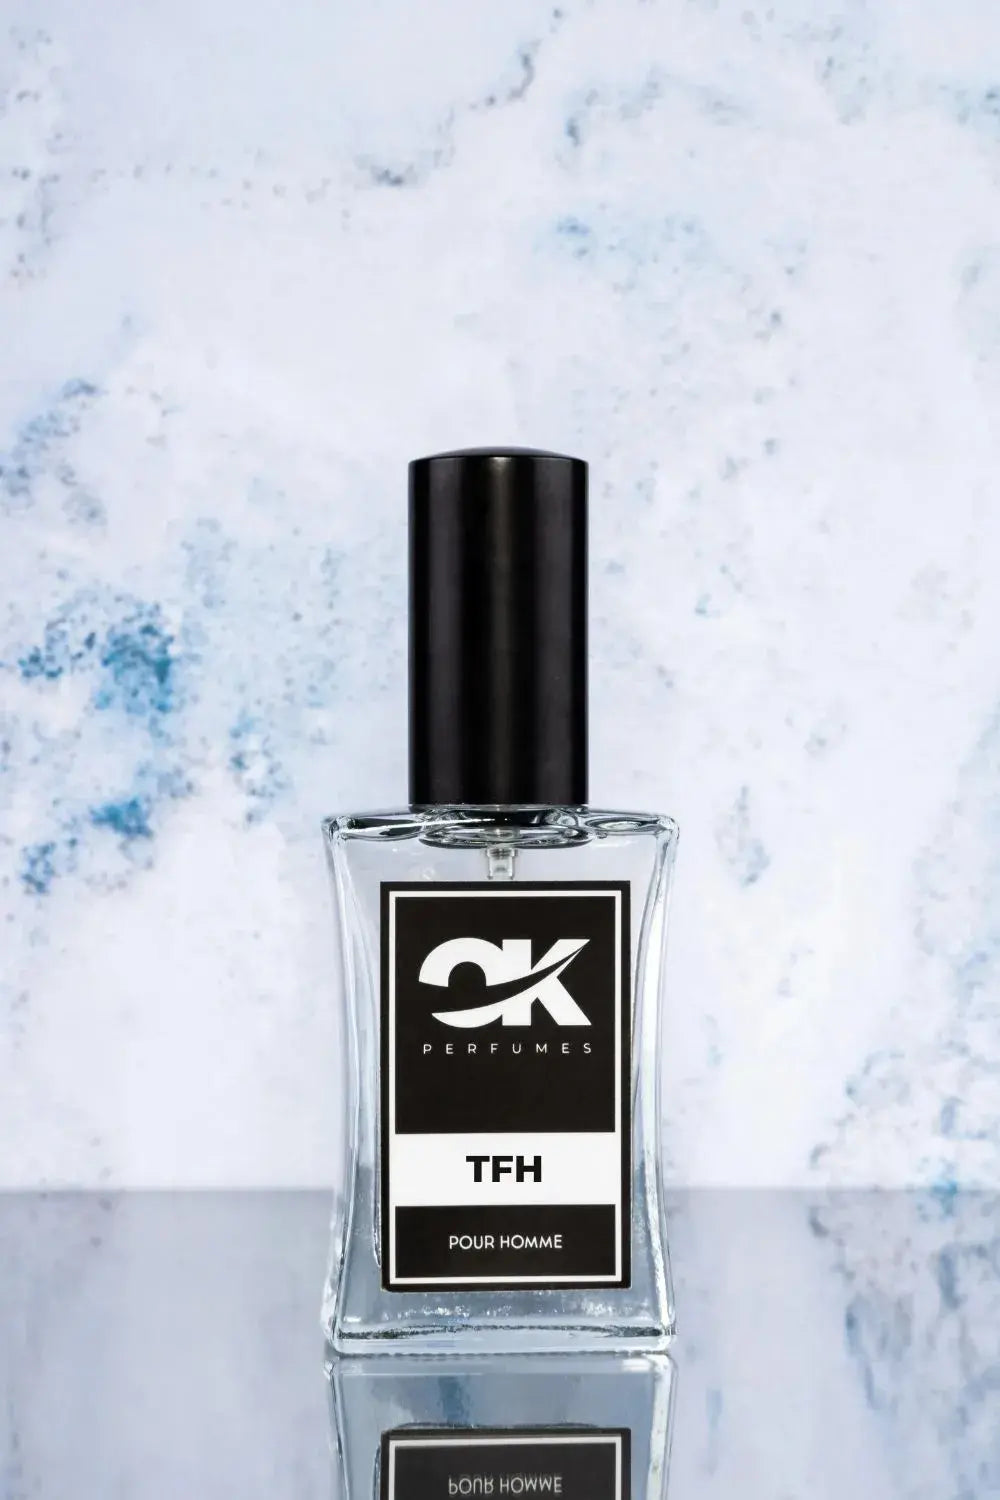 TFH - Recuerda a H24 de Hermès